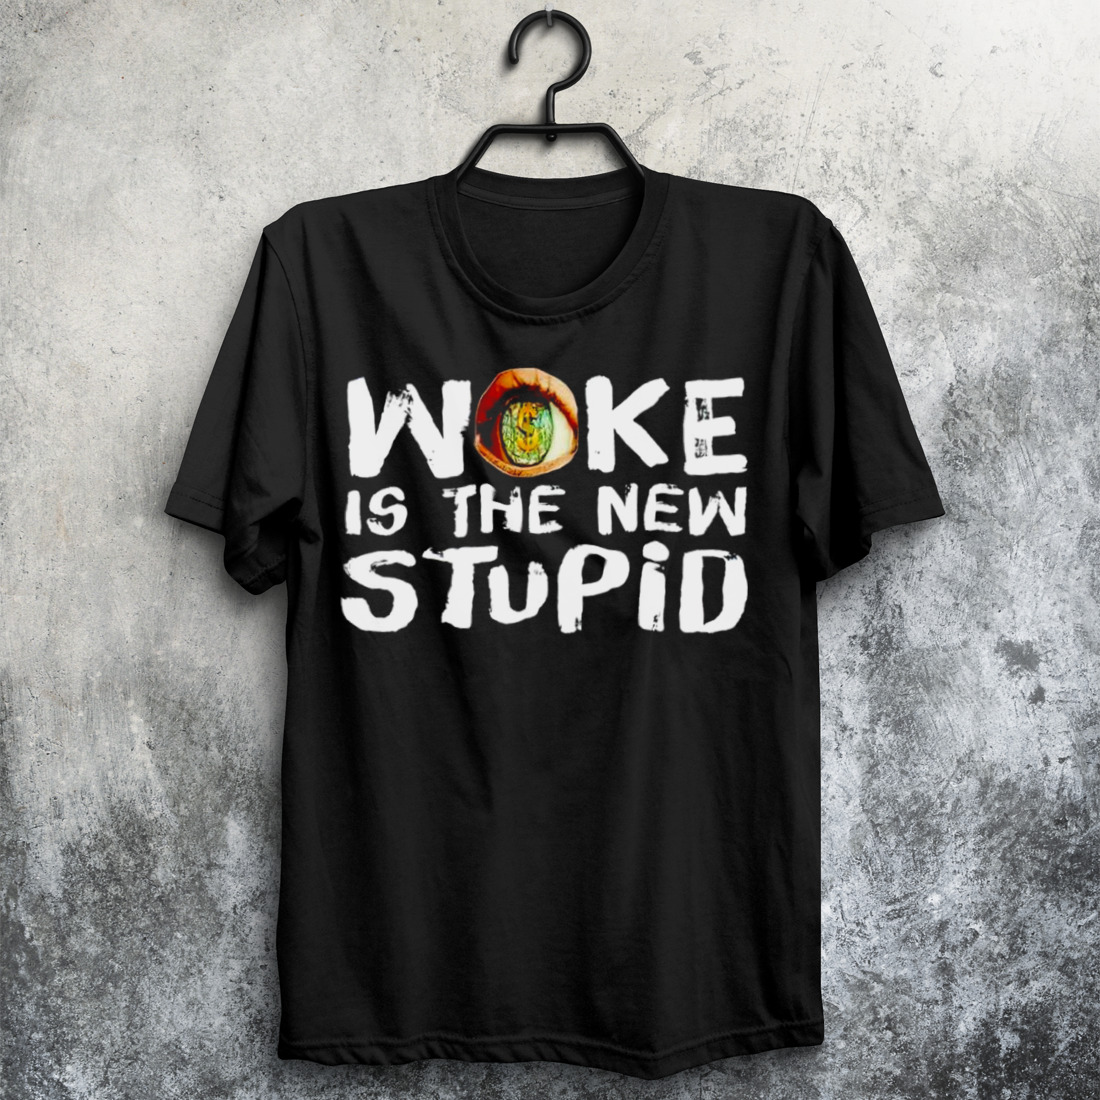 Woke is the new stupid shirt